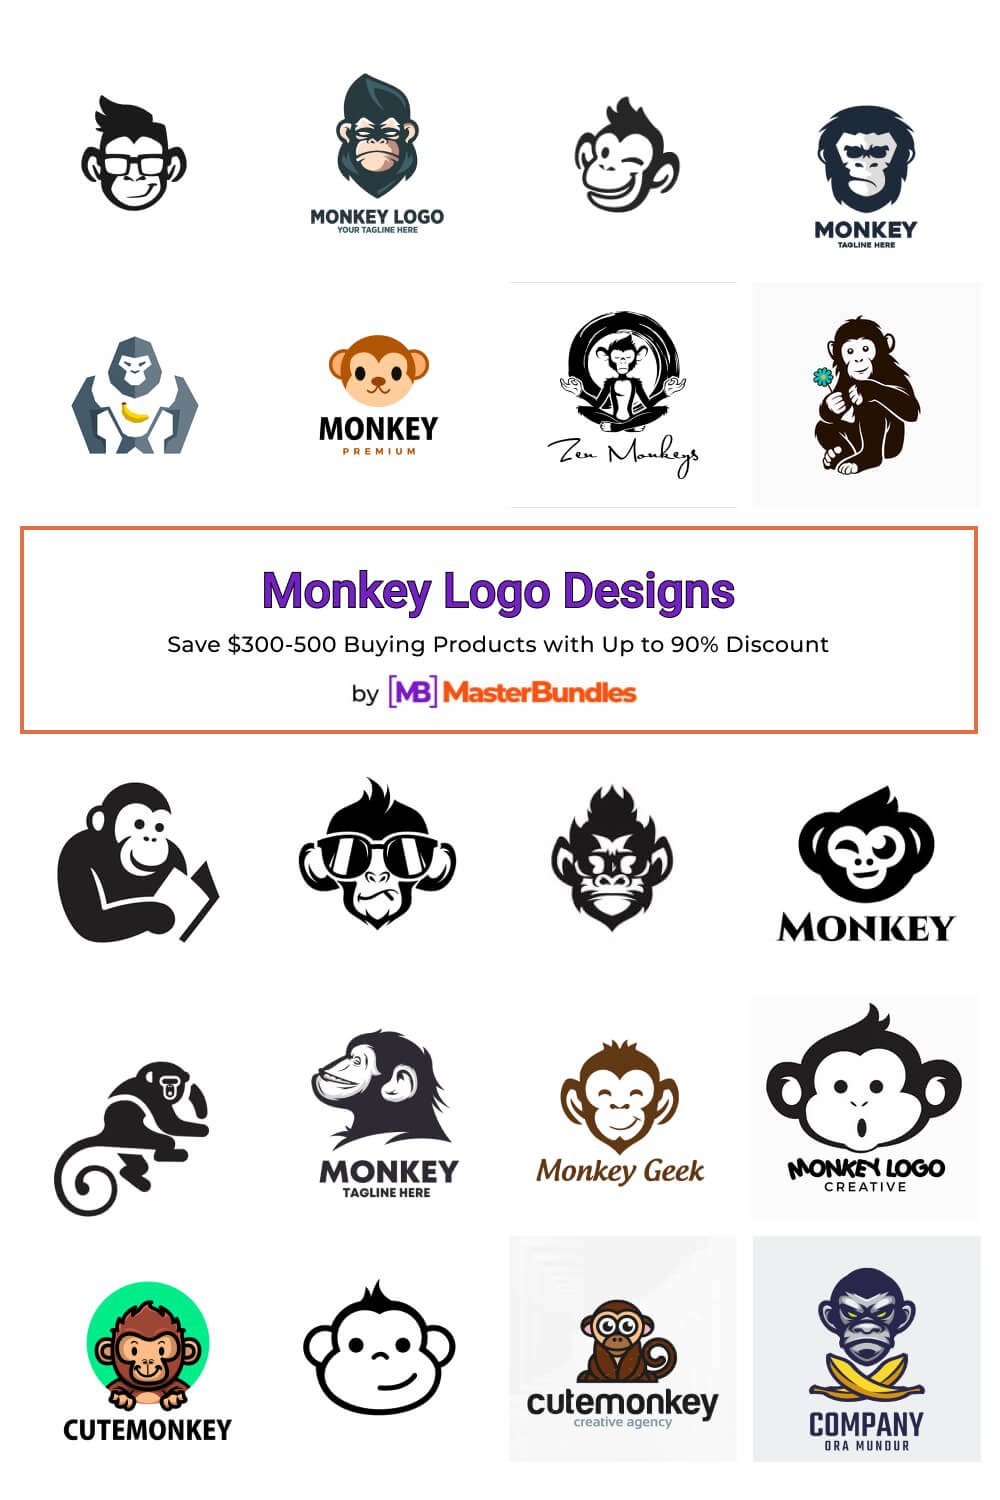 monkey logo designs pinterest image.